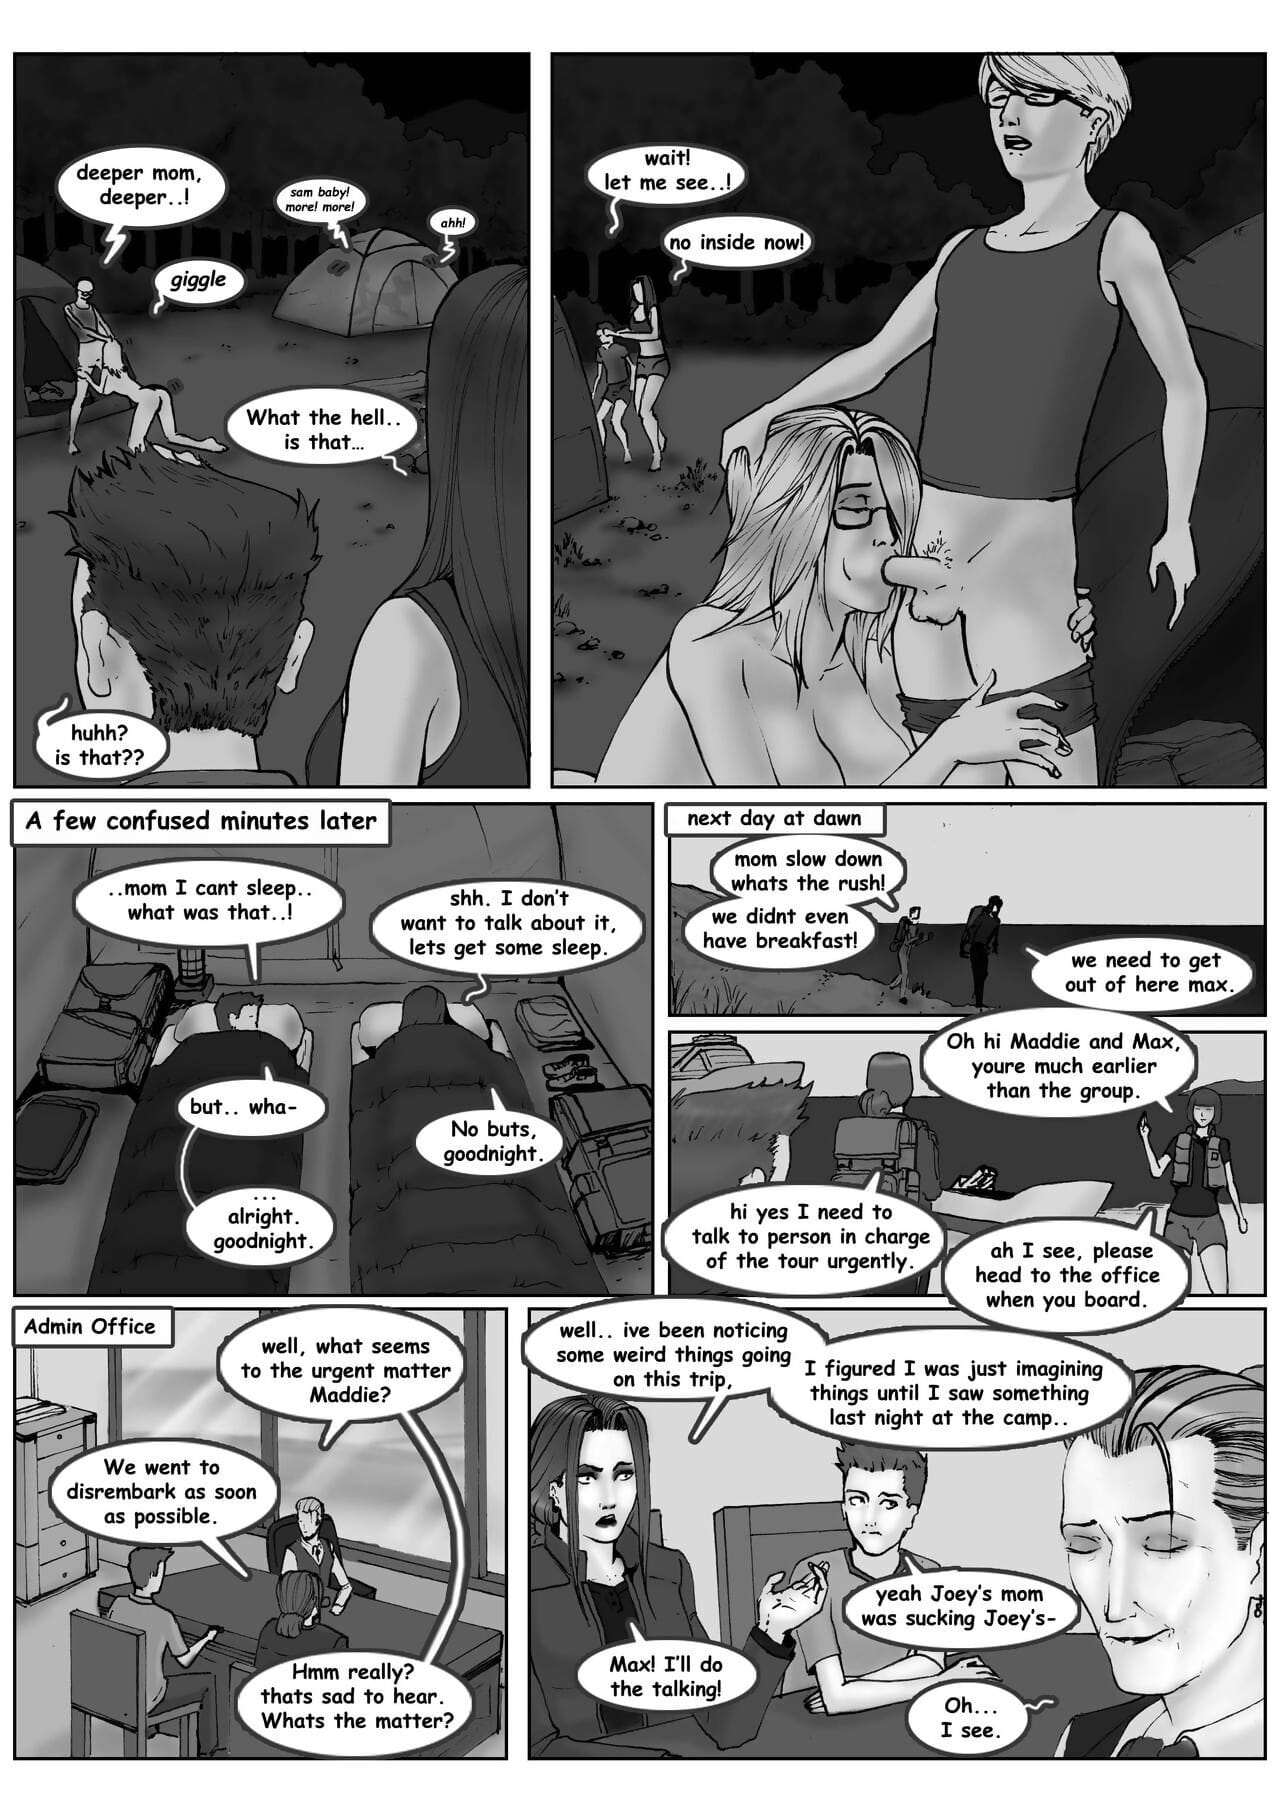 Max and Maddies Island Quest: Part 1: Jocasta page 1